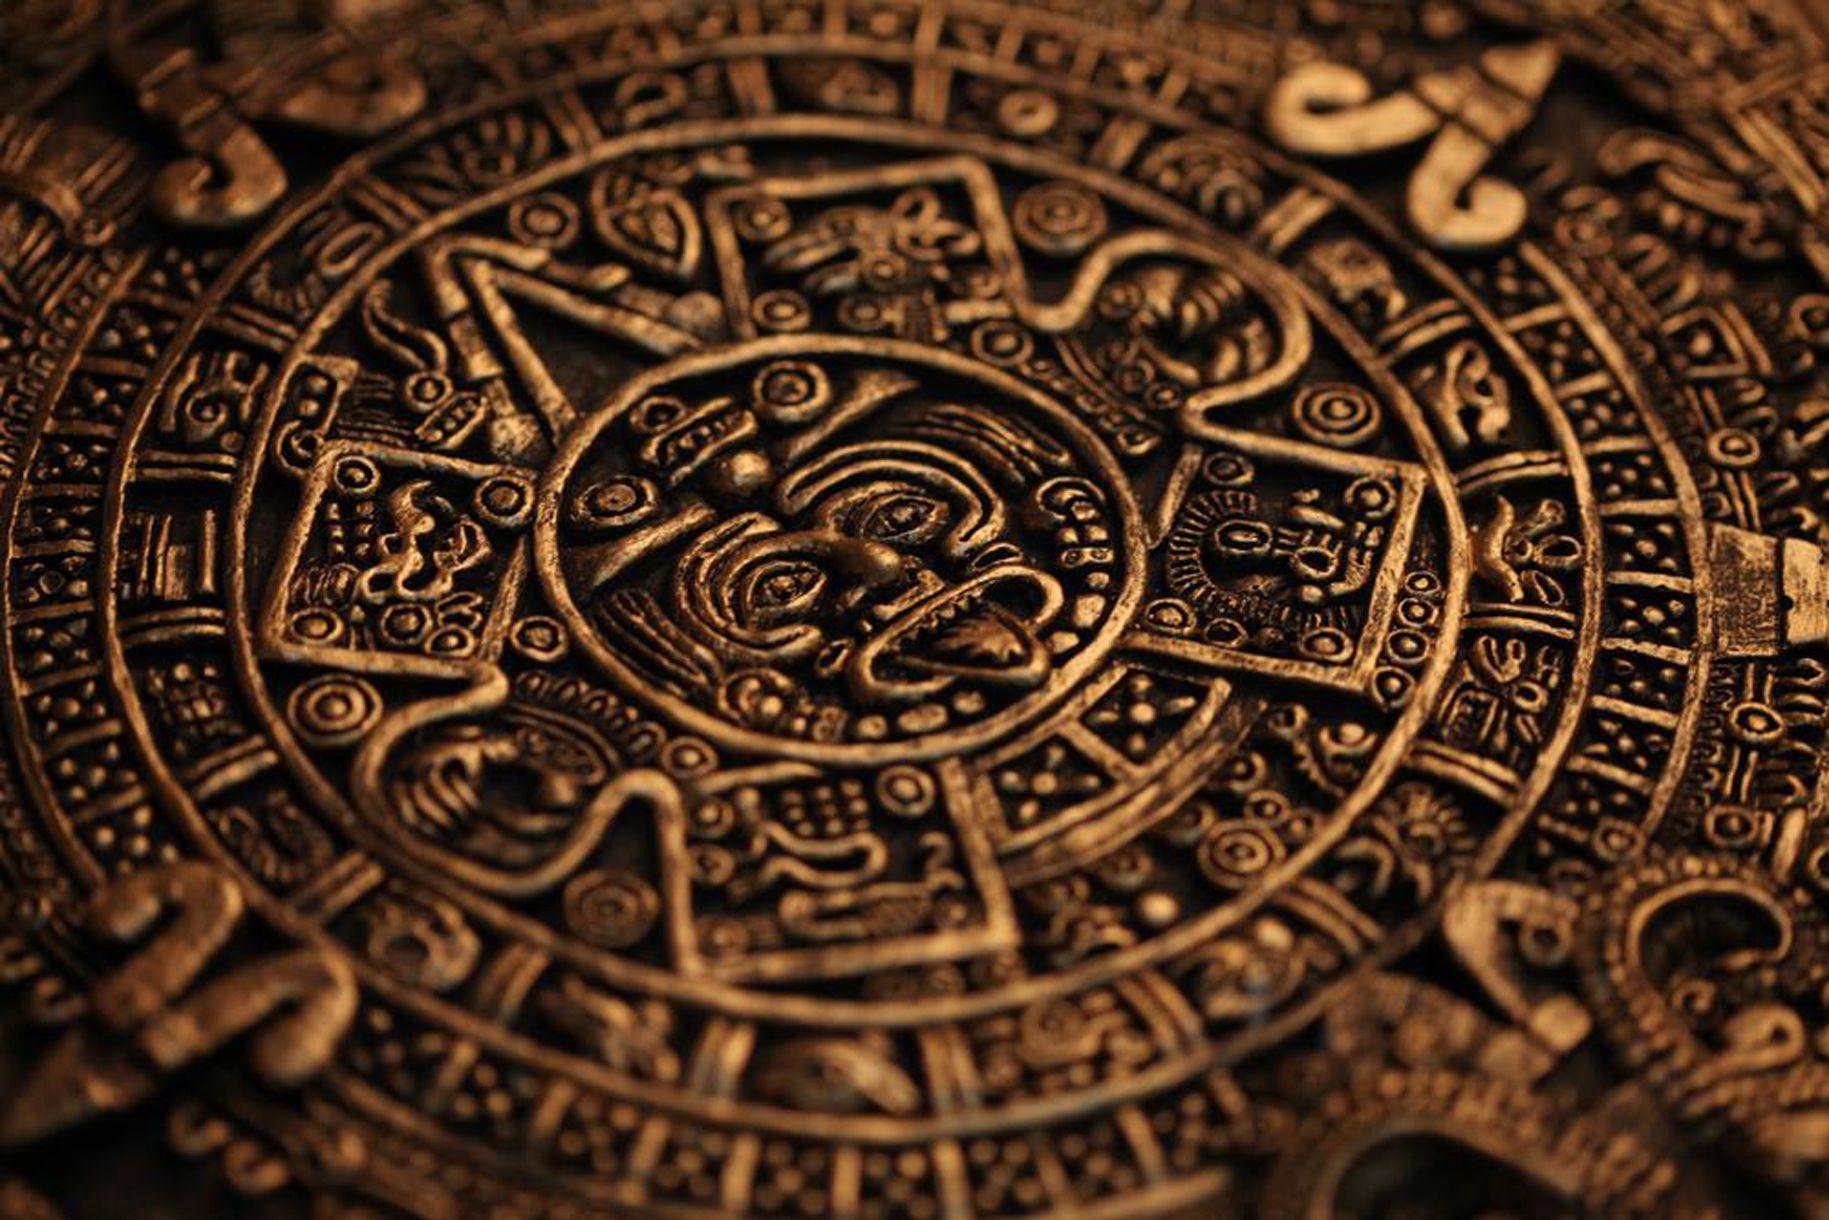 Mayan Calendar HD Wallpaper